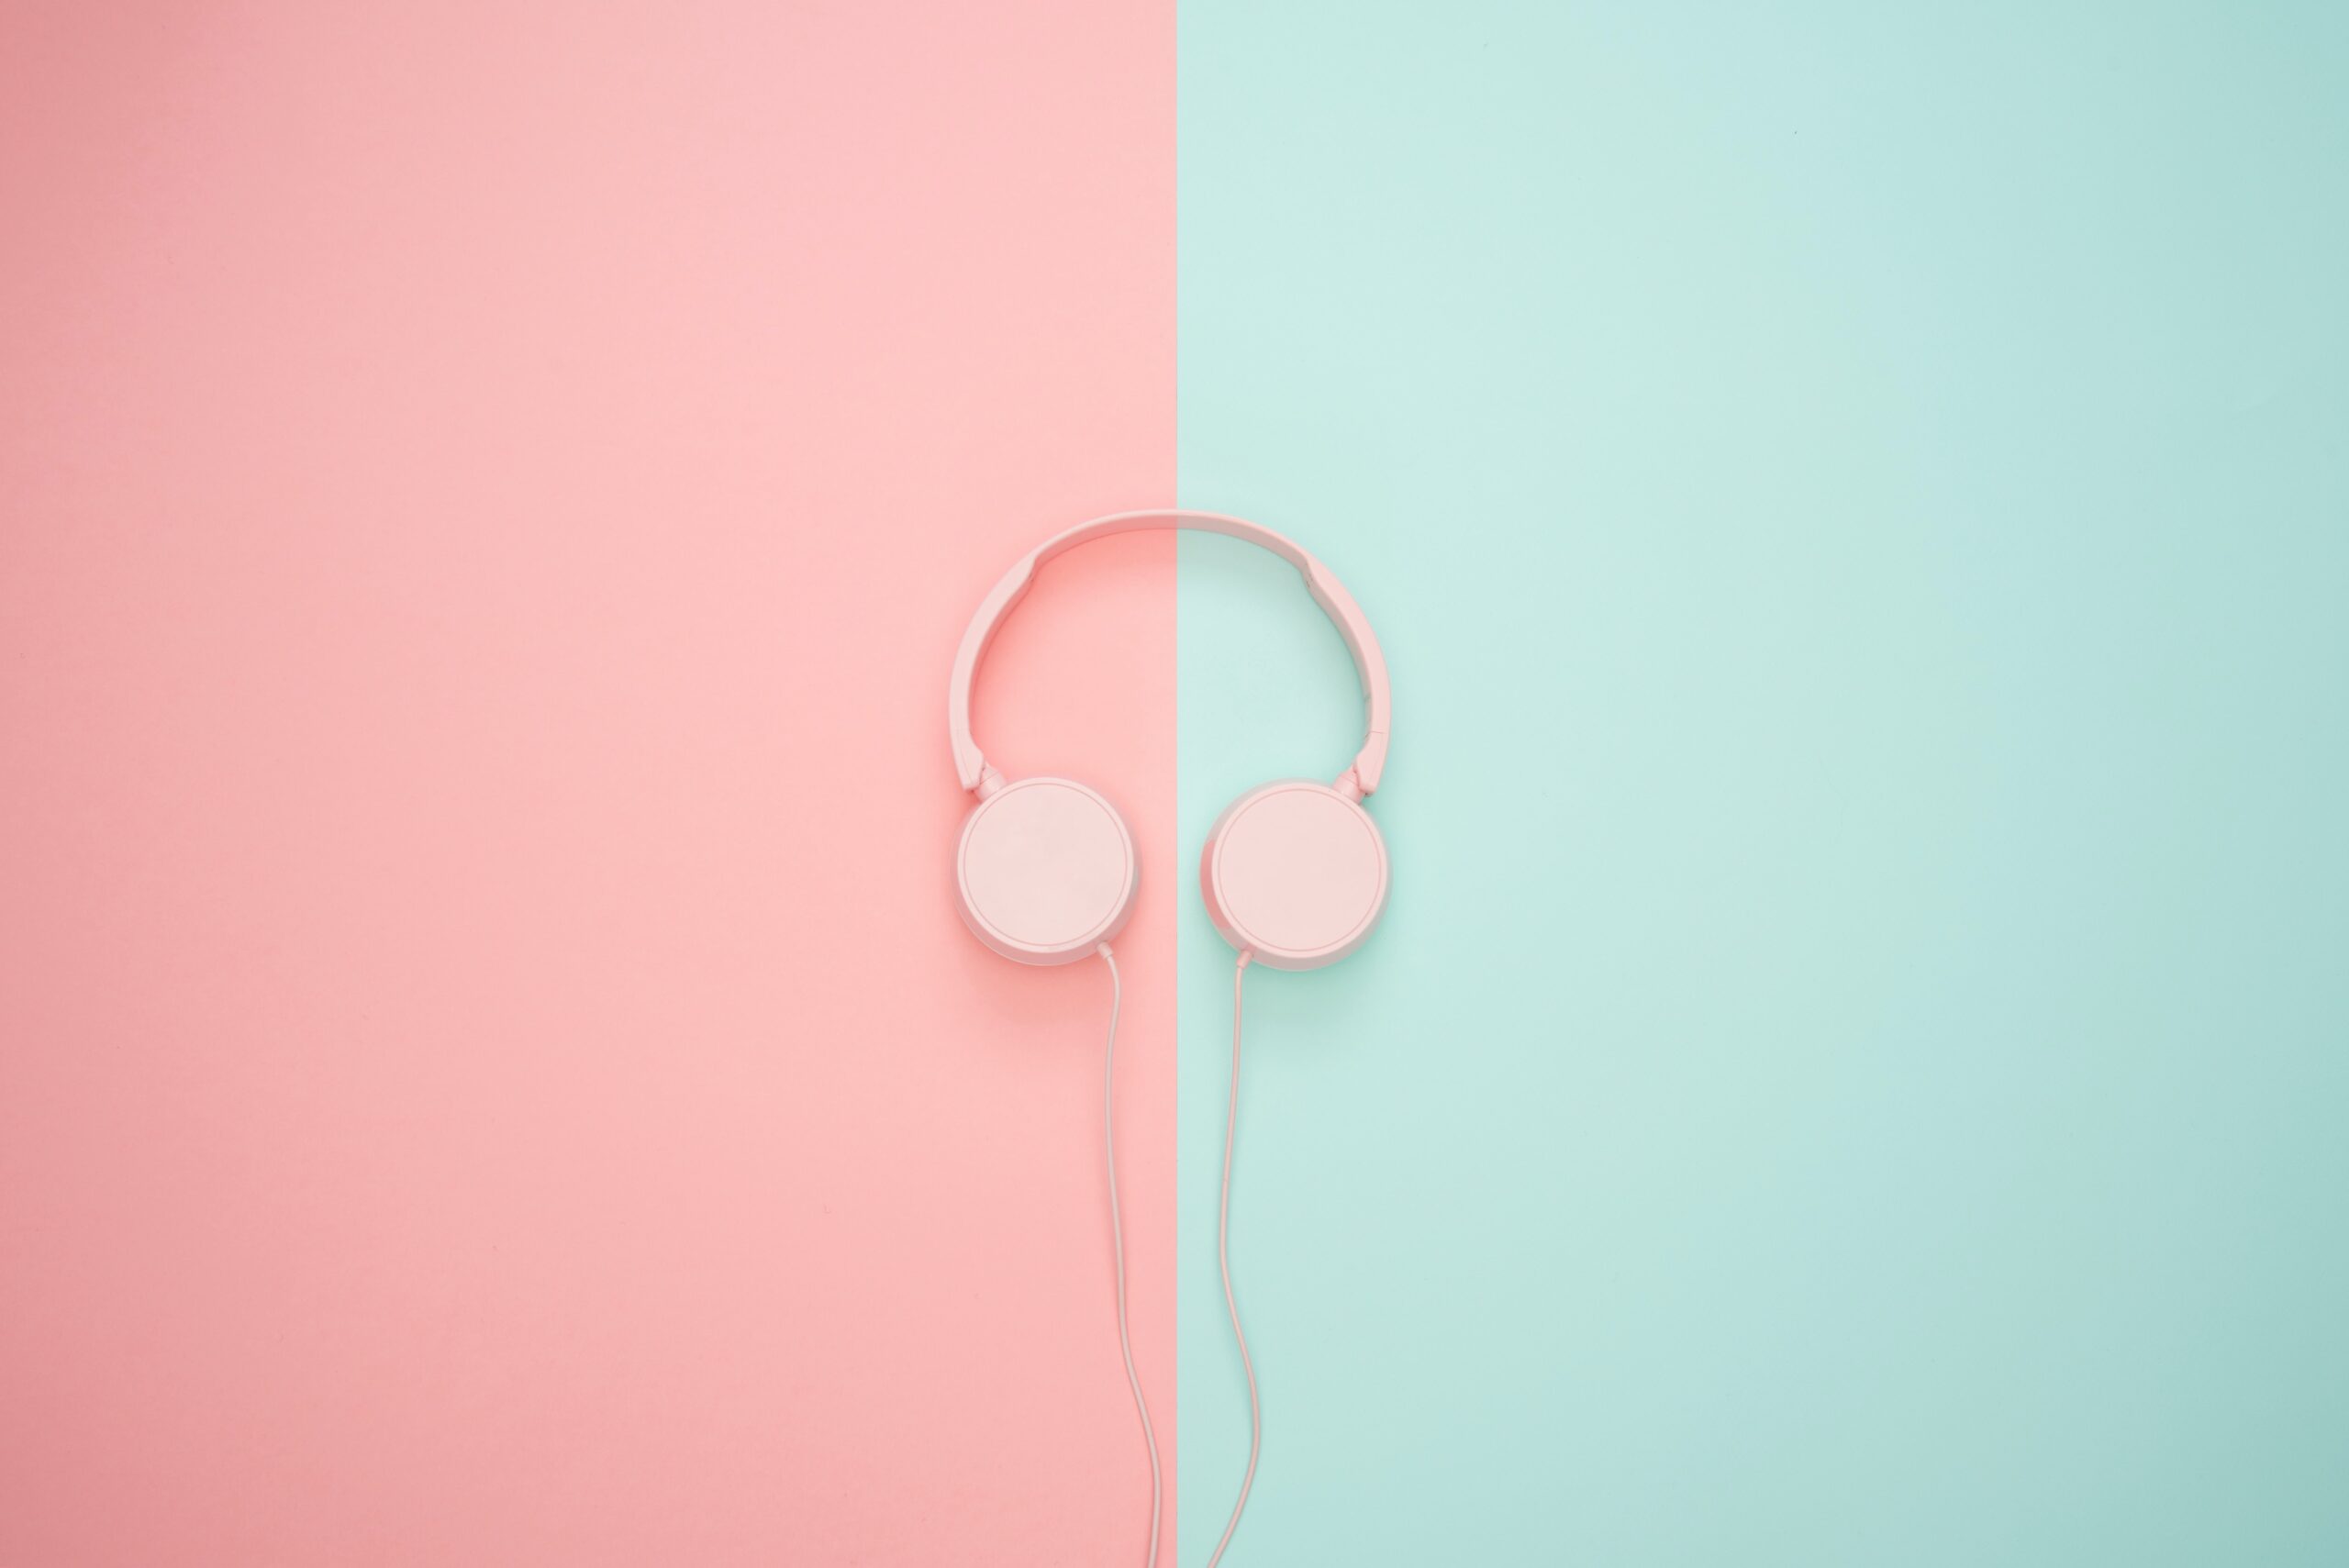 A pair of pink headphones lays on a half-pink half-blue floor